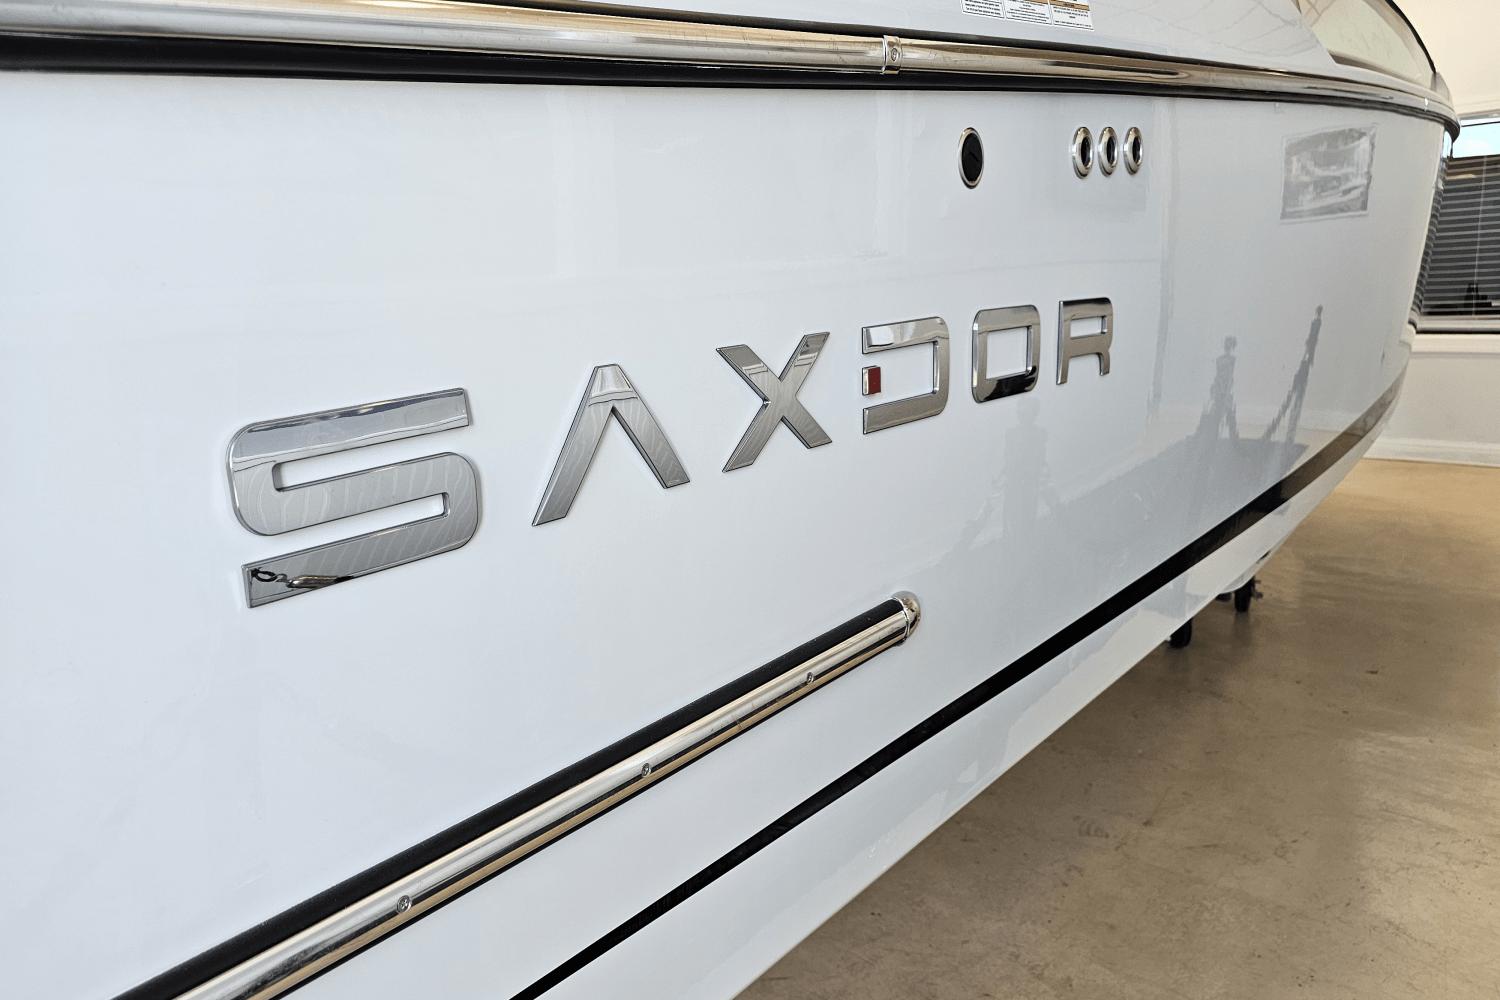 2024 Saxdor 270 GT